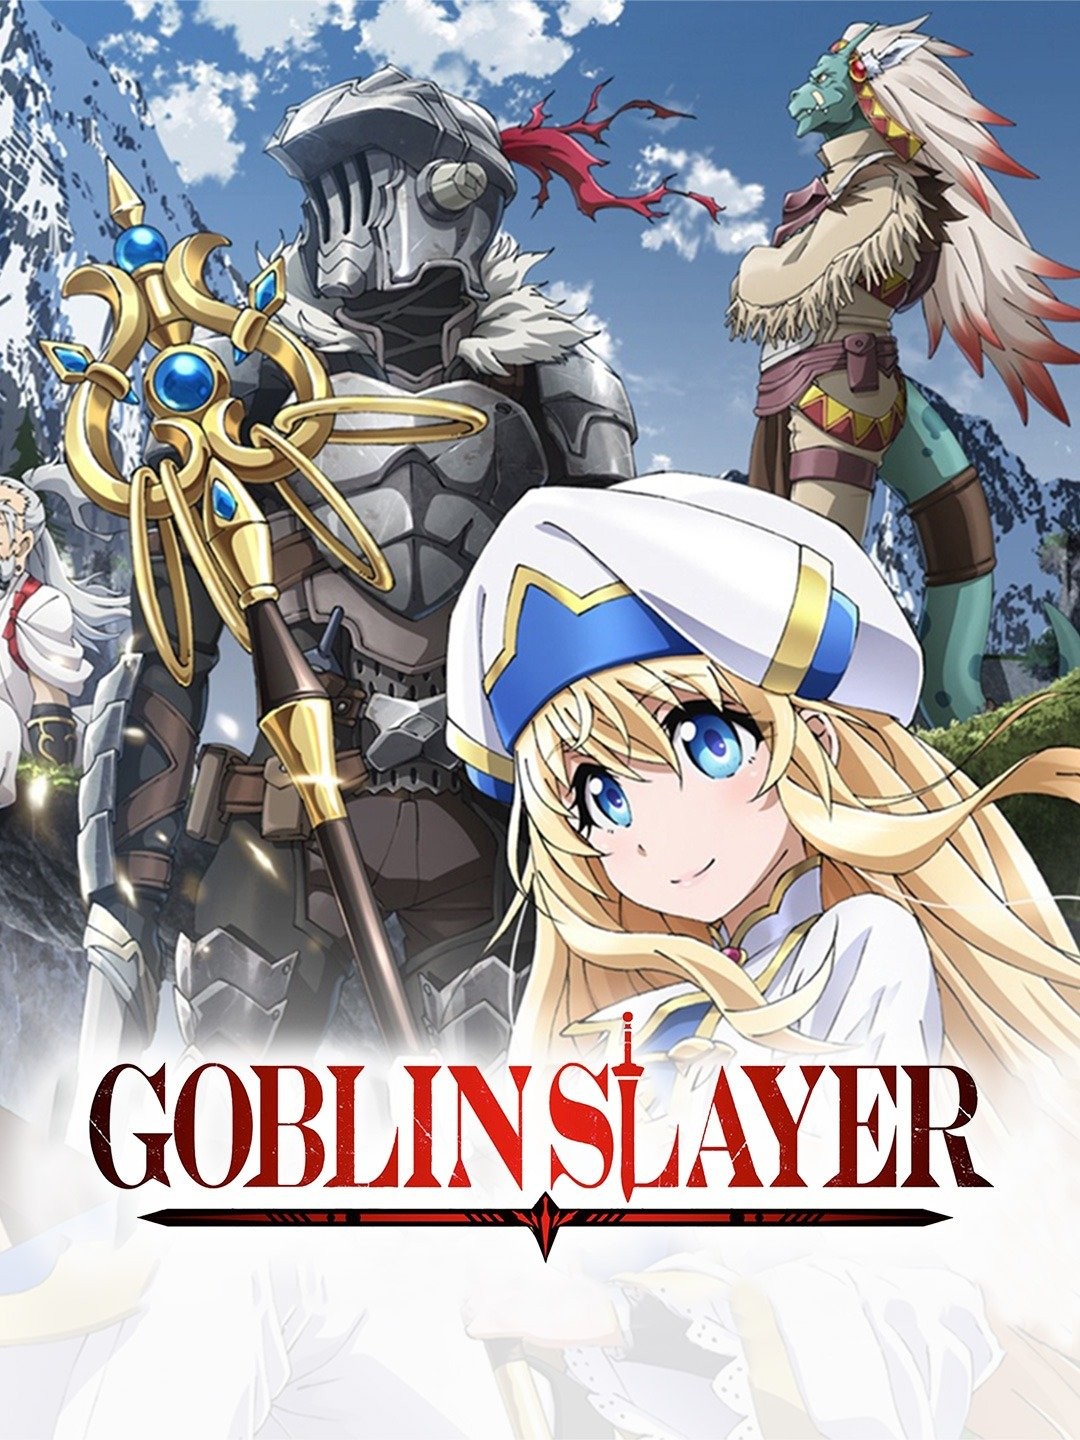 Goblin Slayer: Goblin's Crown - Rotten Tomatoes